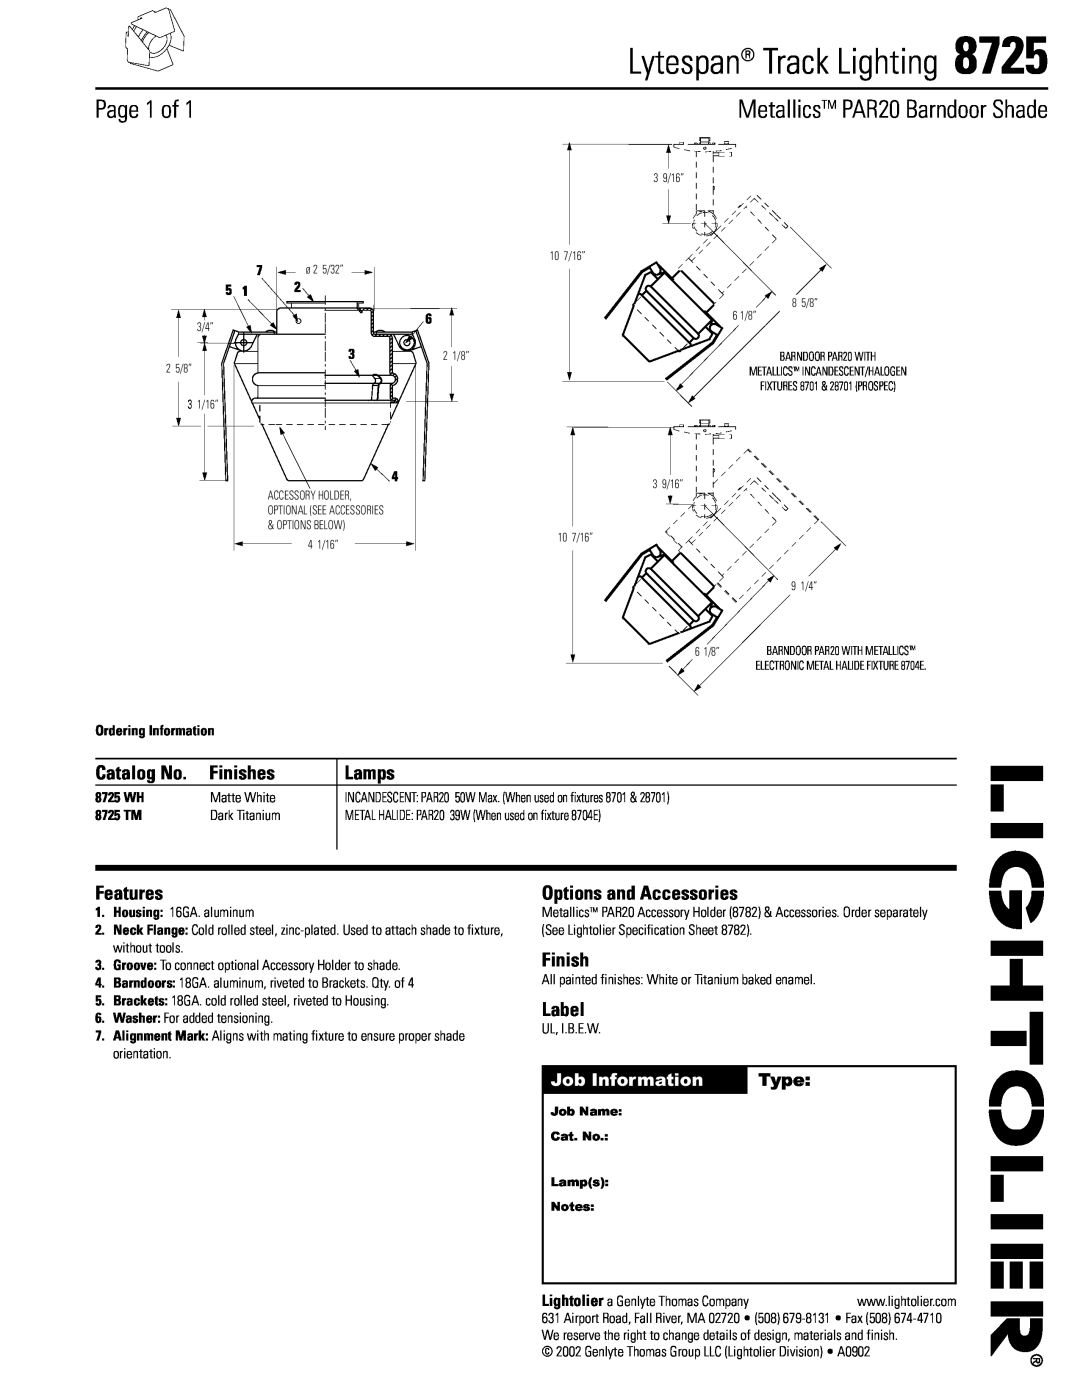 Lightolier 8725 specifications Lytespan Track Lighting, Page 1 of, MetallicsTM PAR20 Barndoor Shade, Catalog No, Finishes 